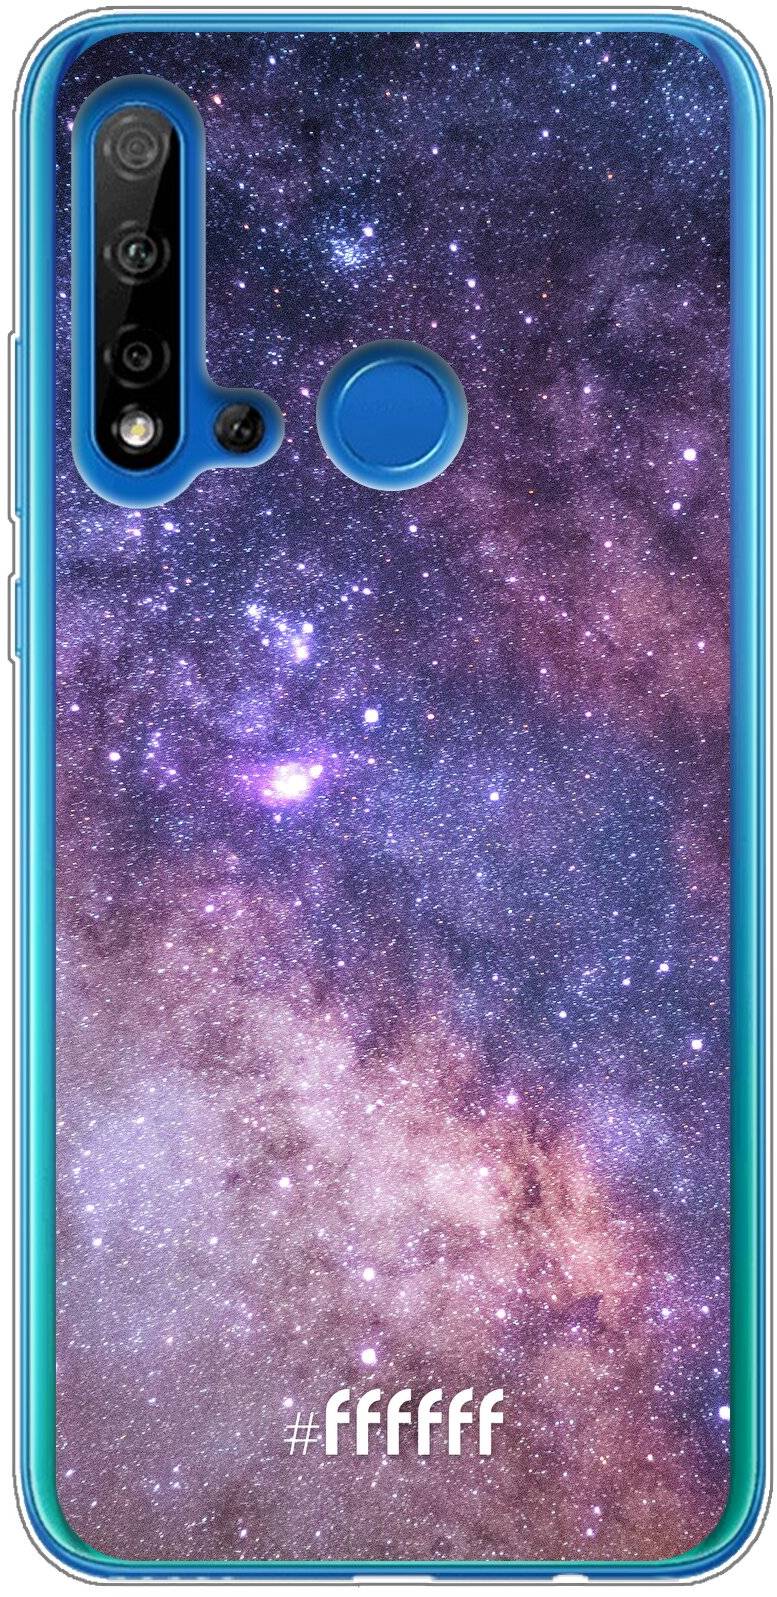 Galaxy Stars P20 Lite (2019)